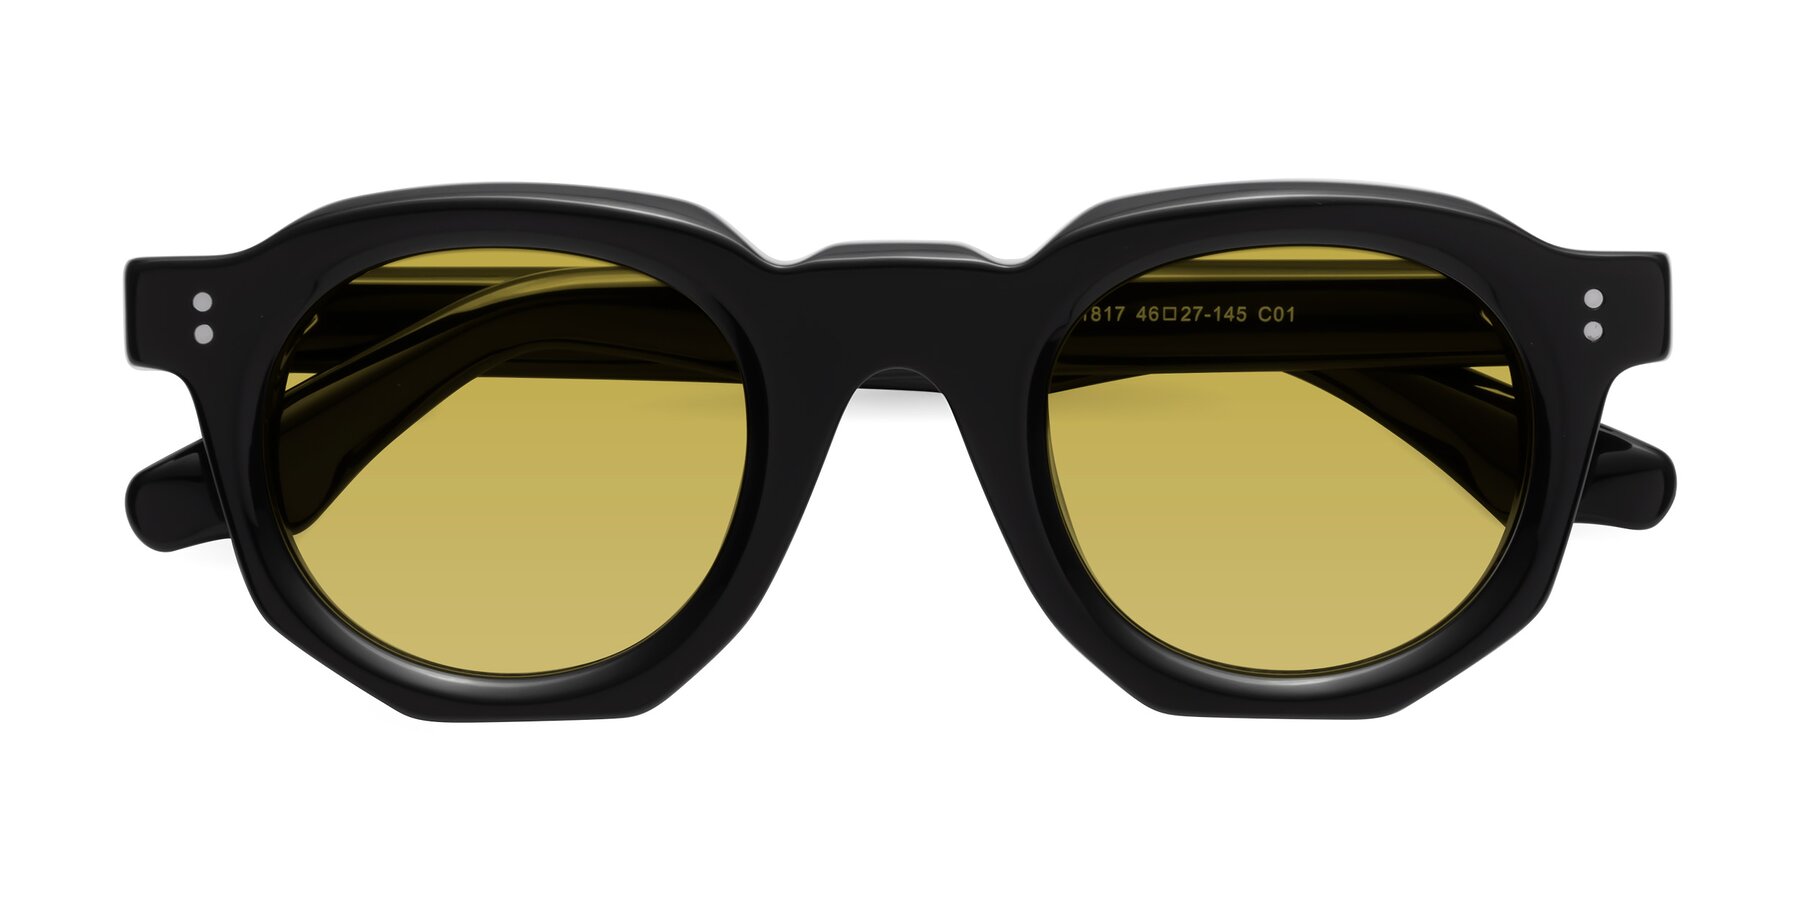 Thick Geek-Chic Geometric Tinted Sunglasses